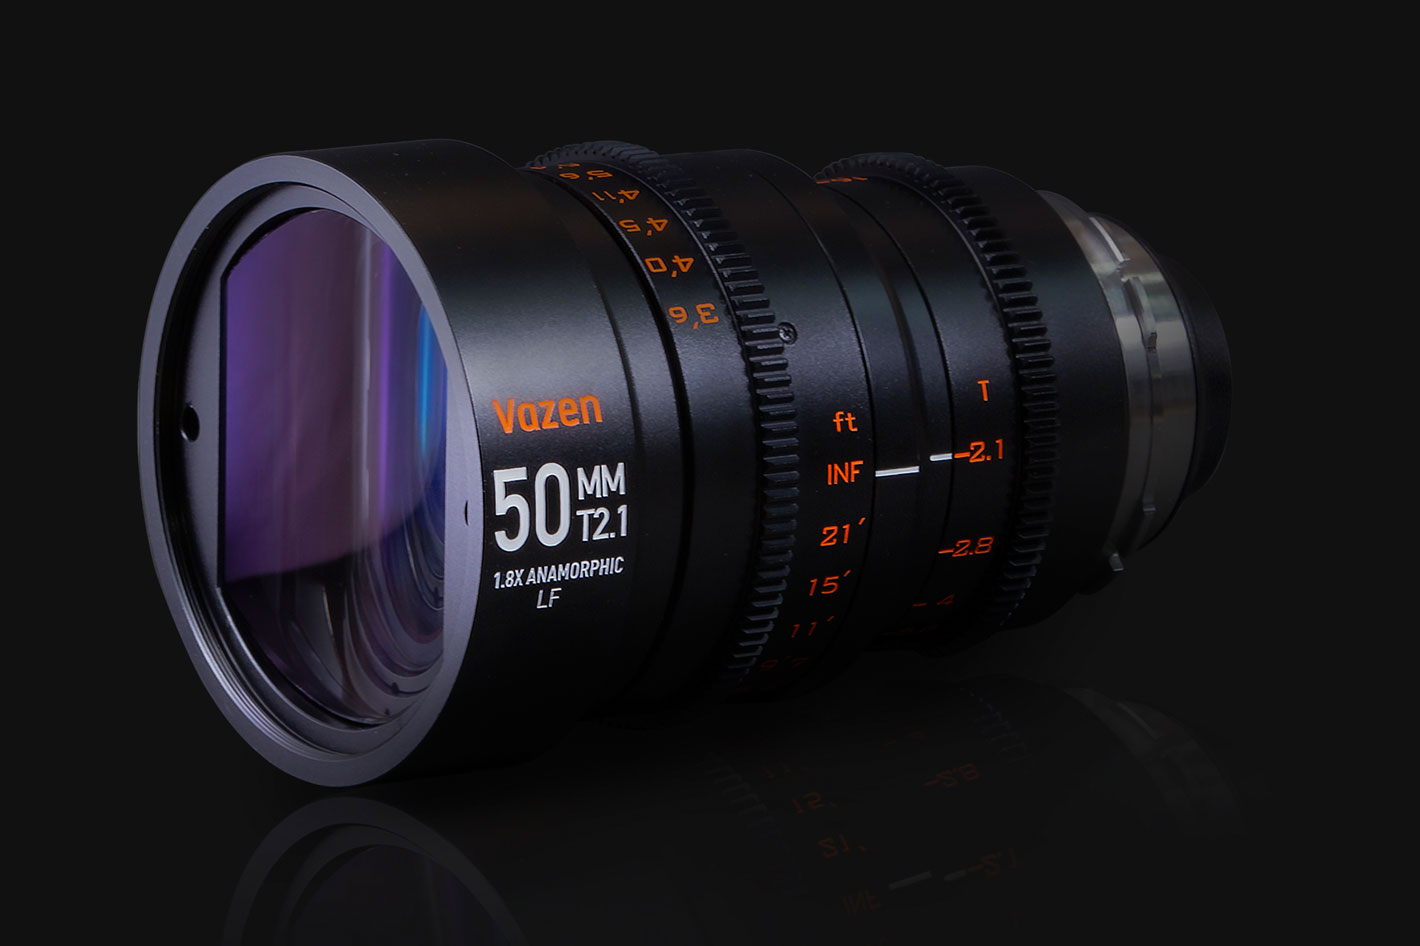 Vazen has a new 50mm T2.1 1.8X anamorphic lens for full frame